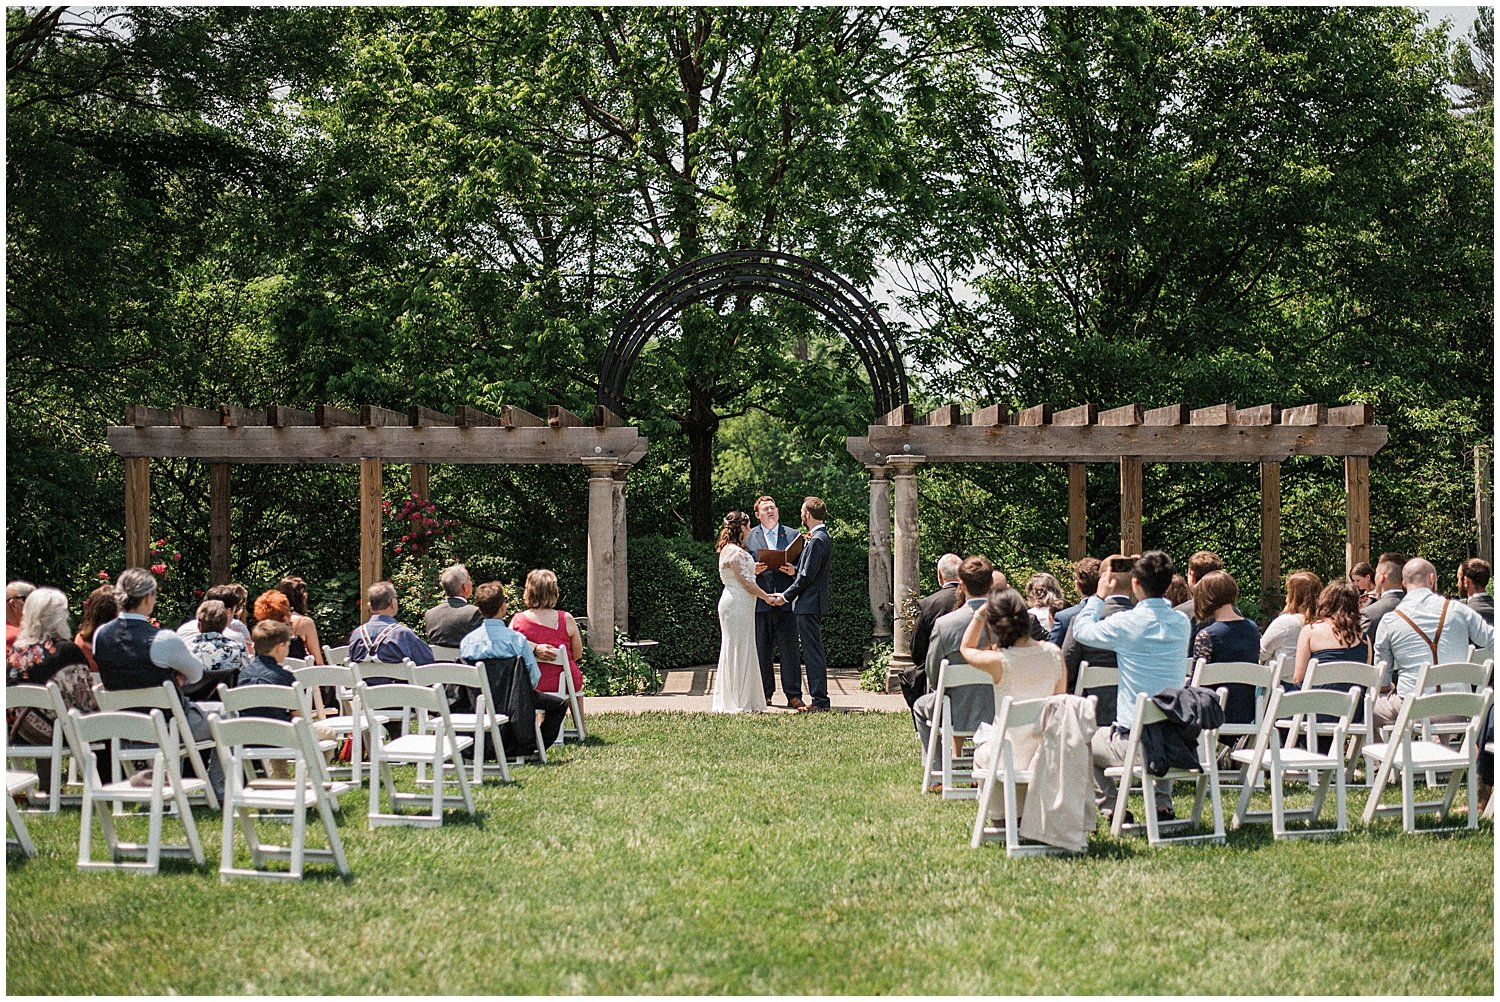 Ault Park Rose Garden Wedding | Cincinnati, Ohio